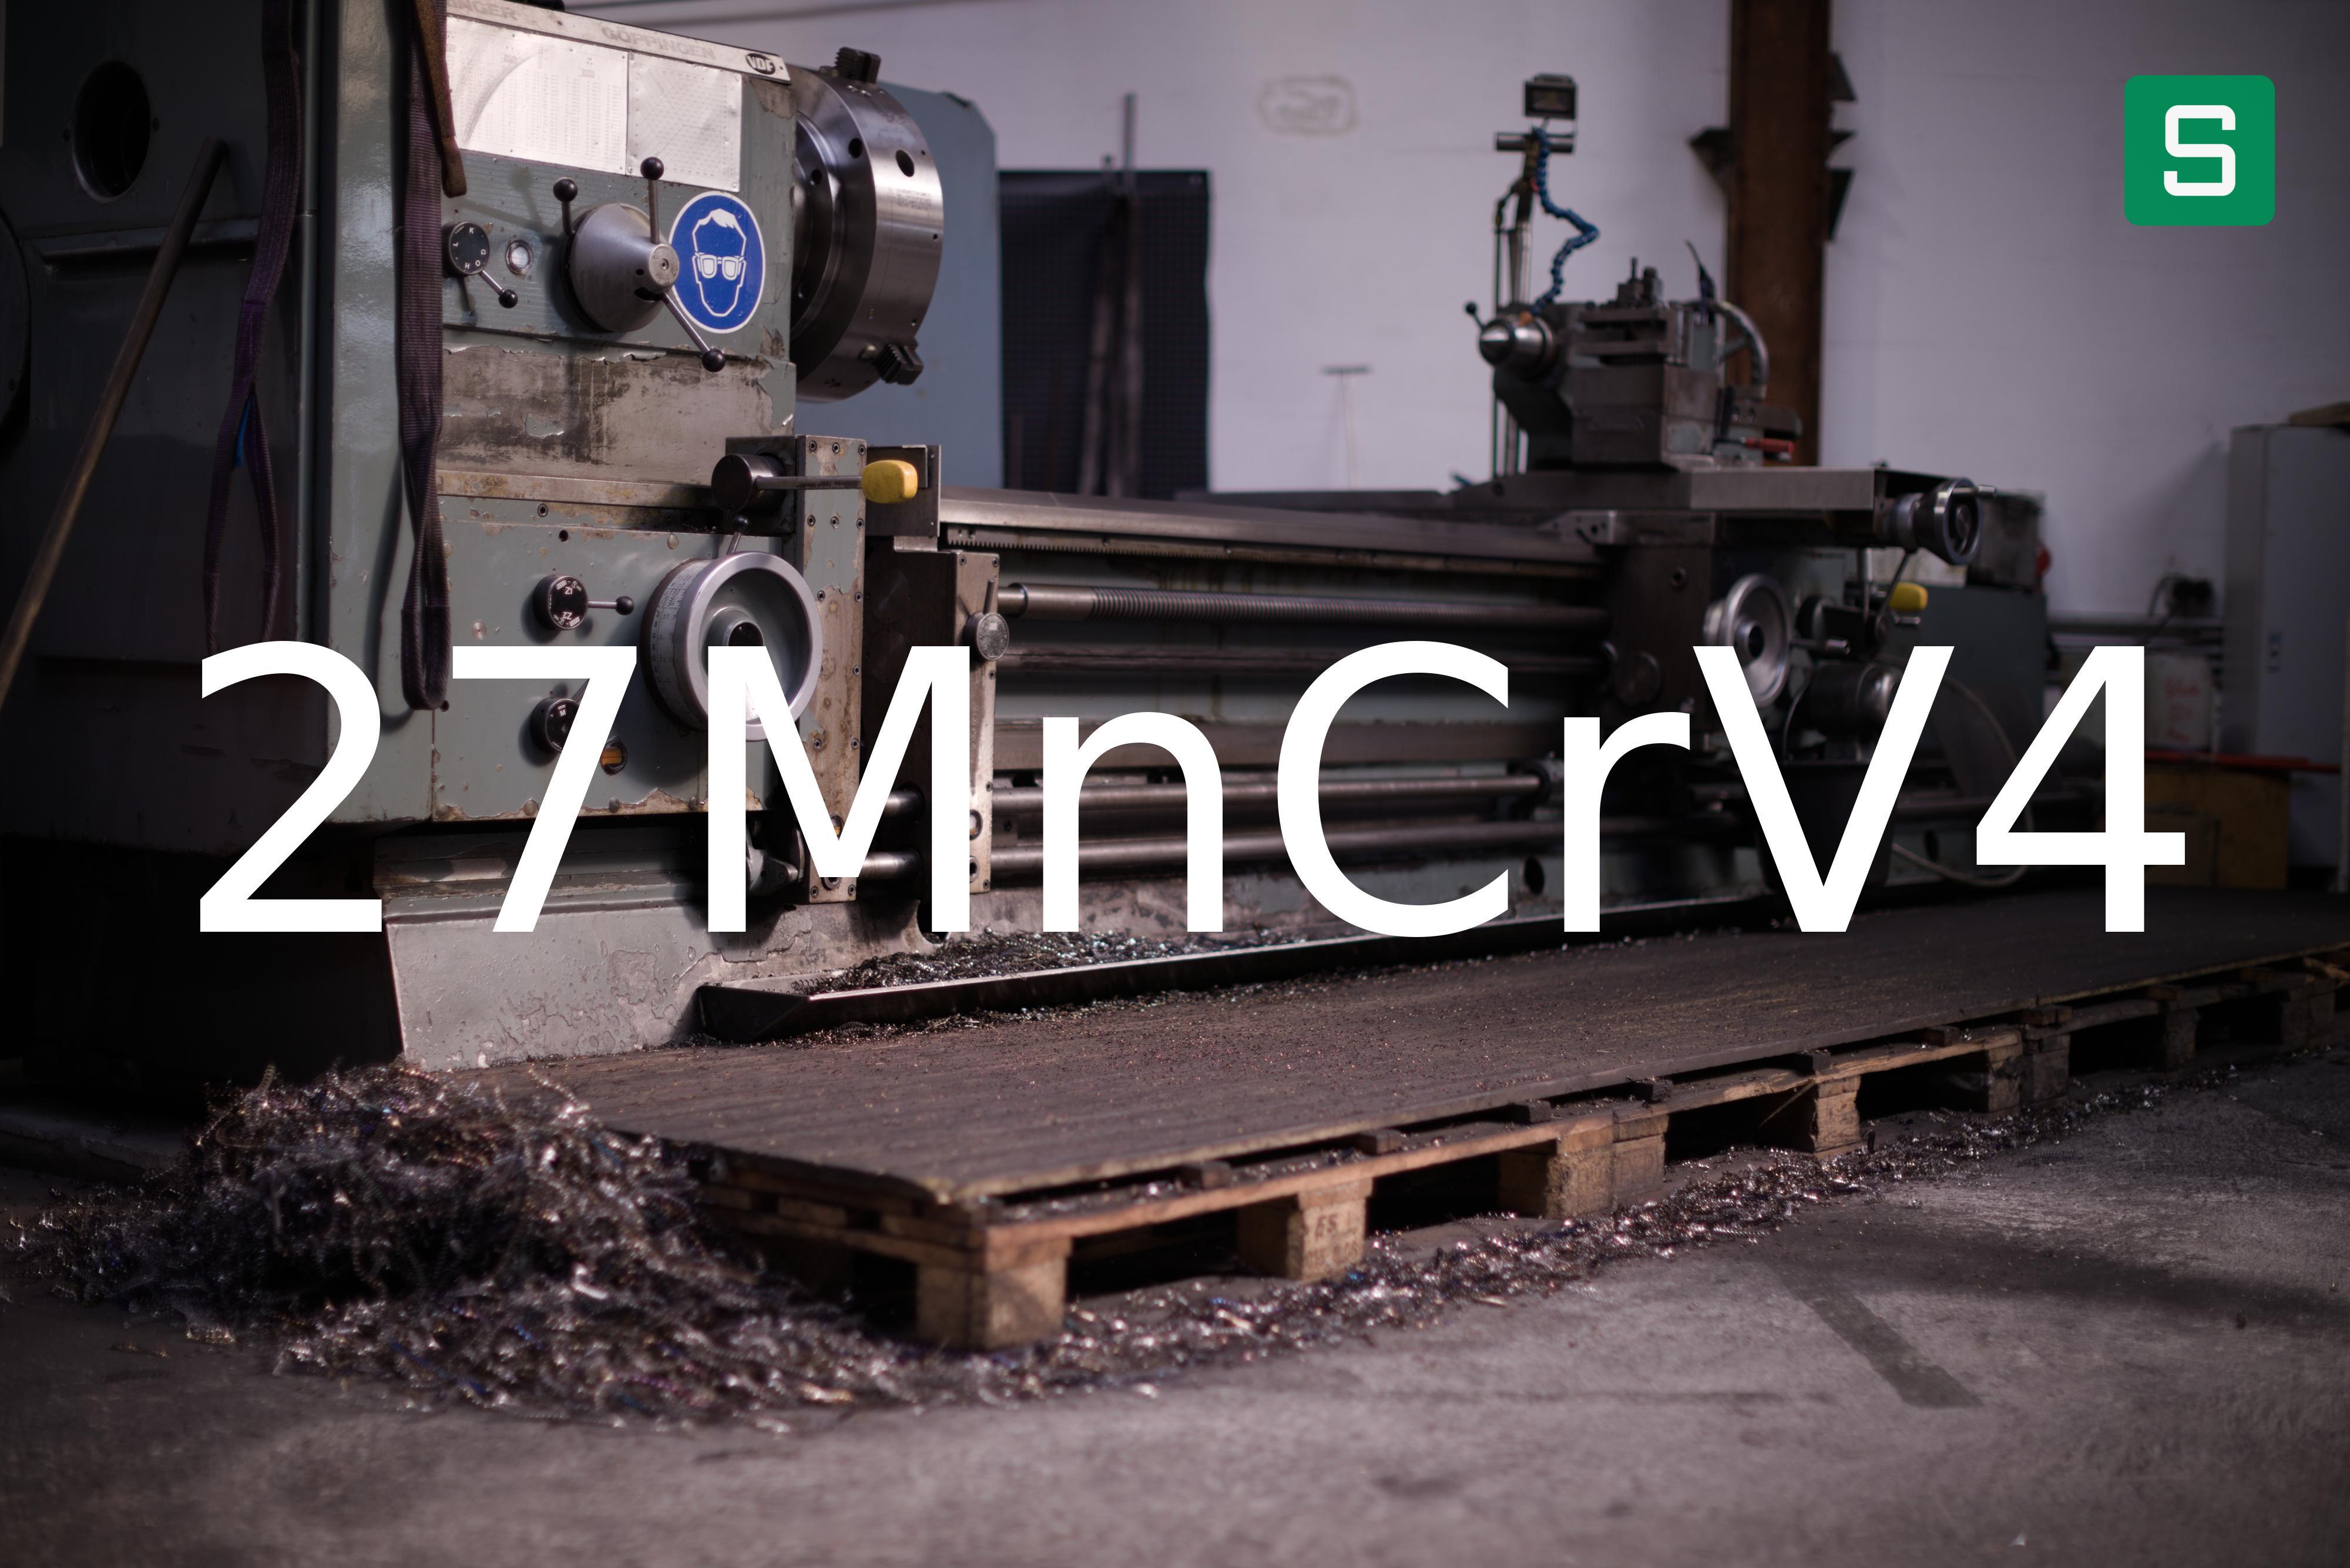 Steel Material: 27MnCrV4